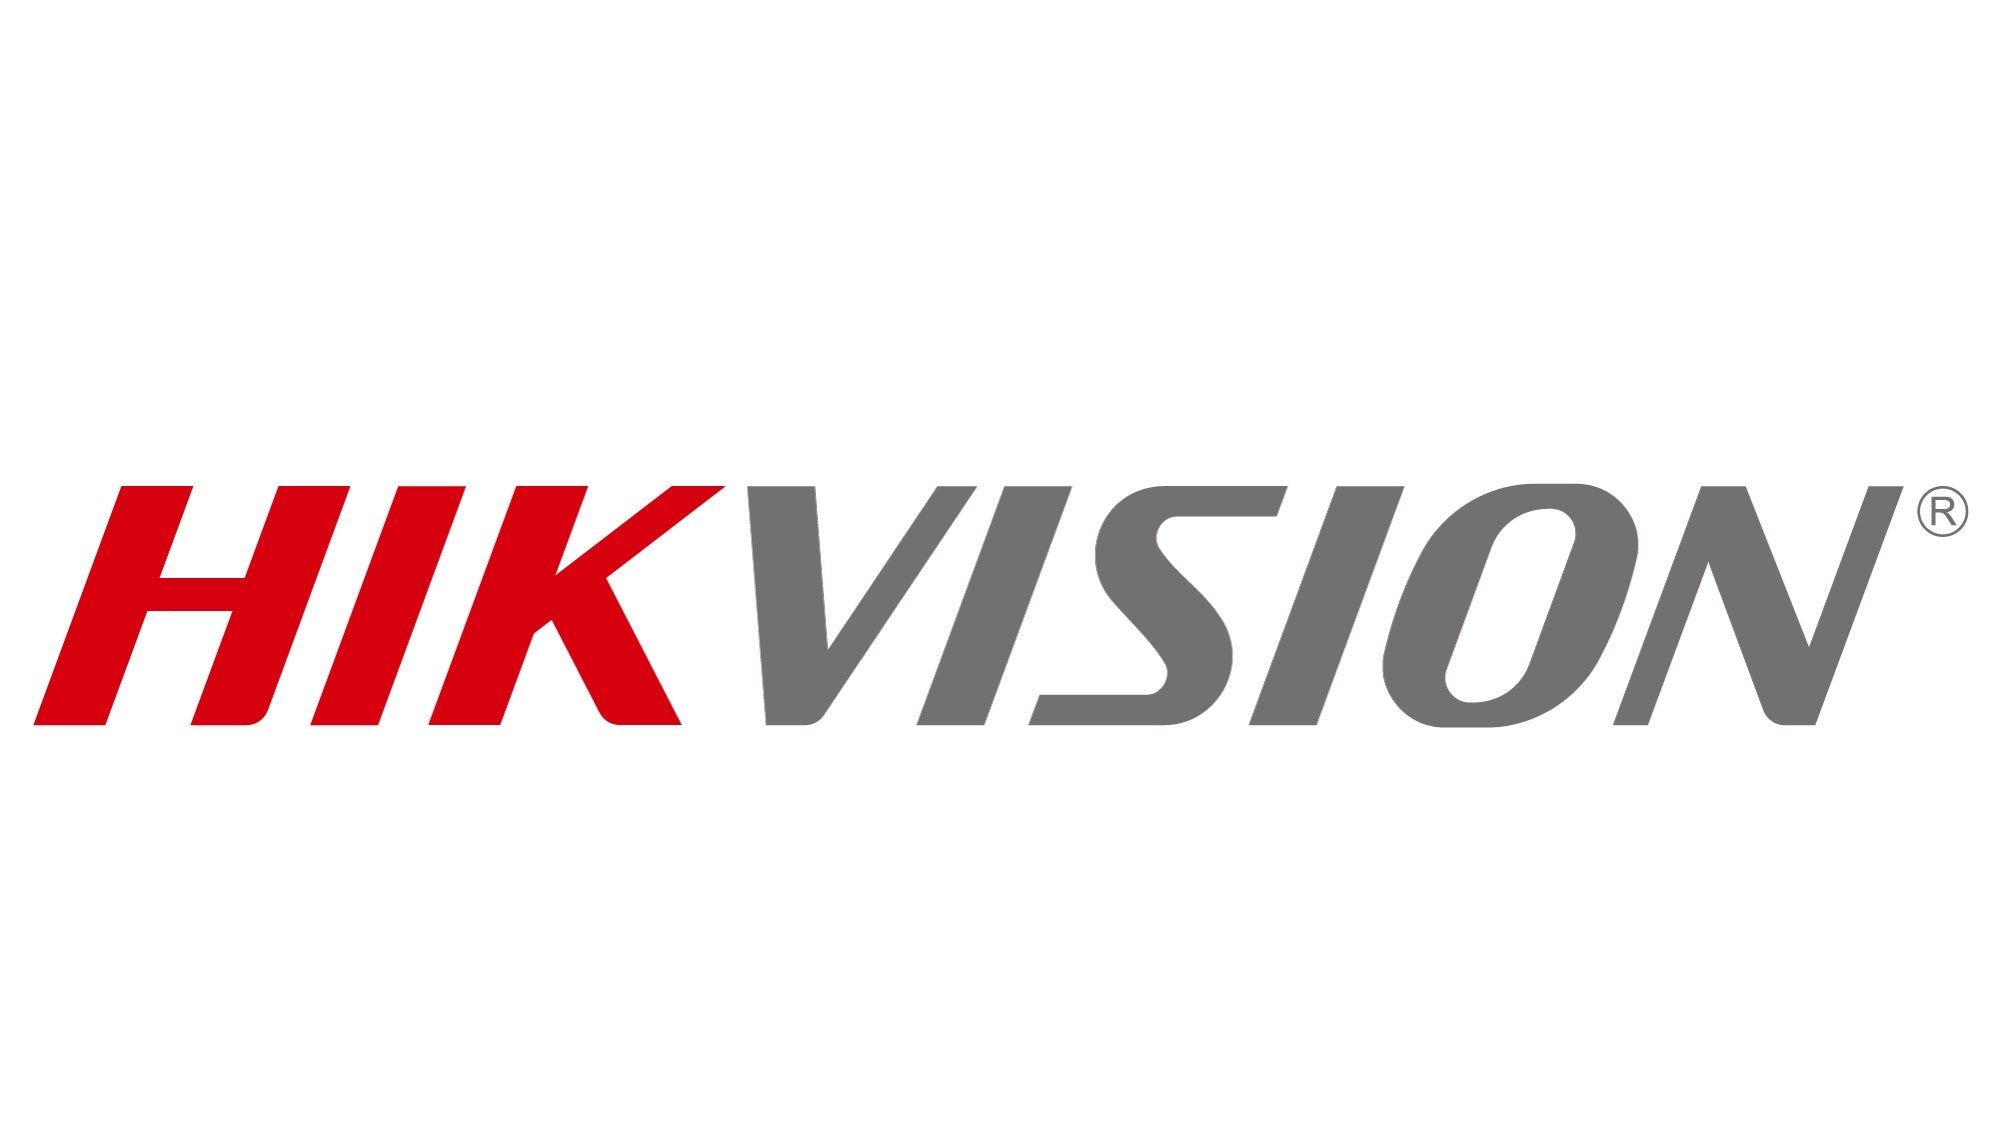 Hikvision Gen2 IP Intercom Silver Door Station, DS-KD8003-IME1/S